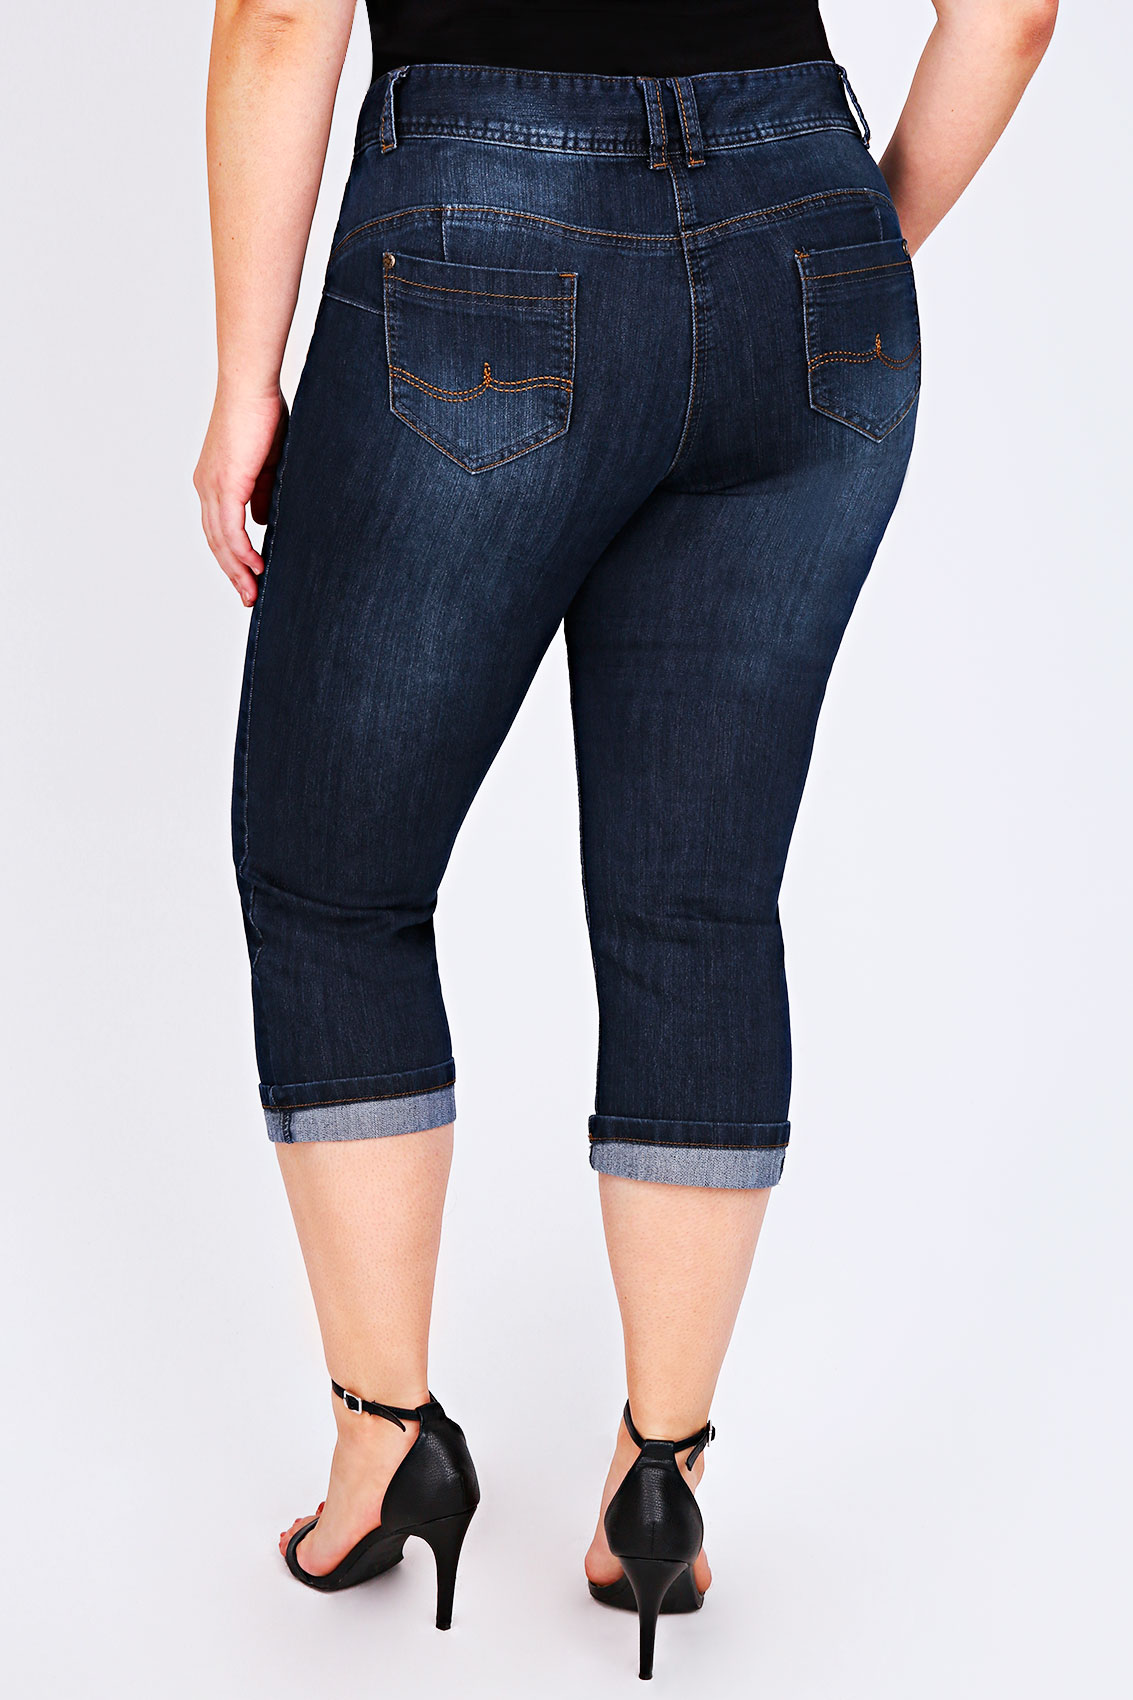 Indigo Blue Bum Shaper Cropped Denim Jeans plus Size 14 to 28